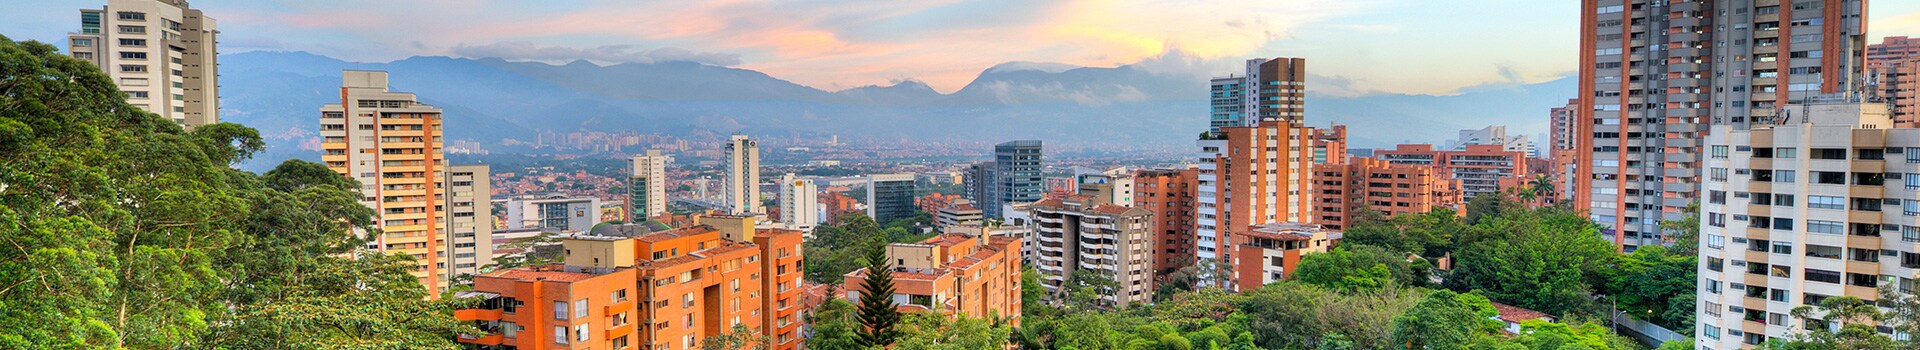 Madrid - Medellín - jose marie cordova